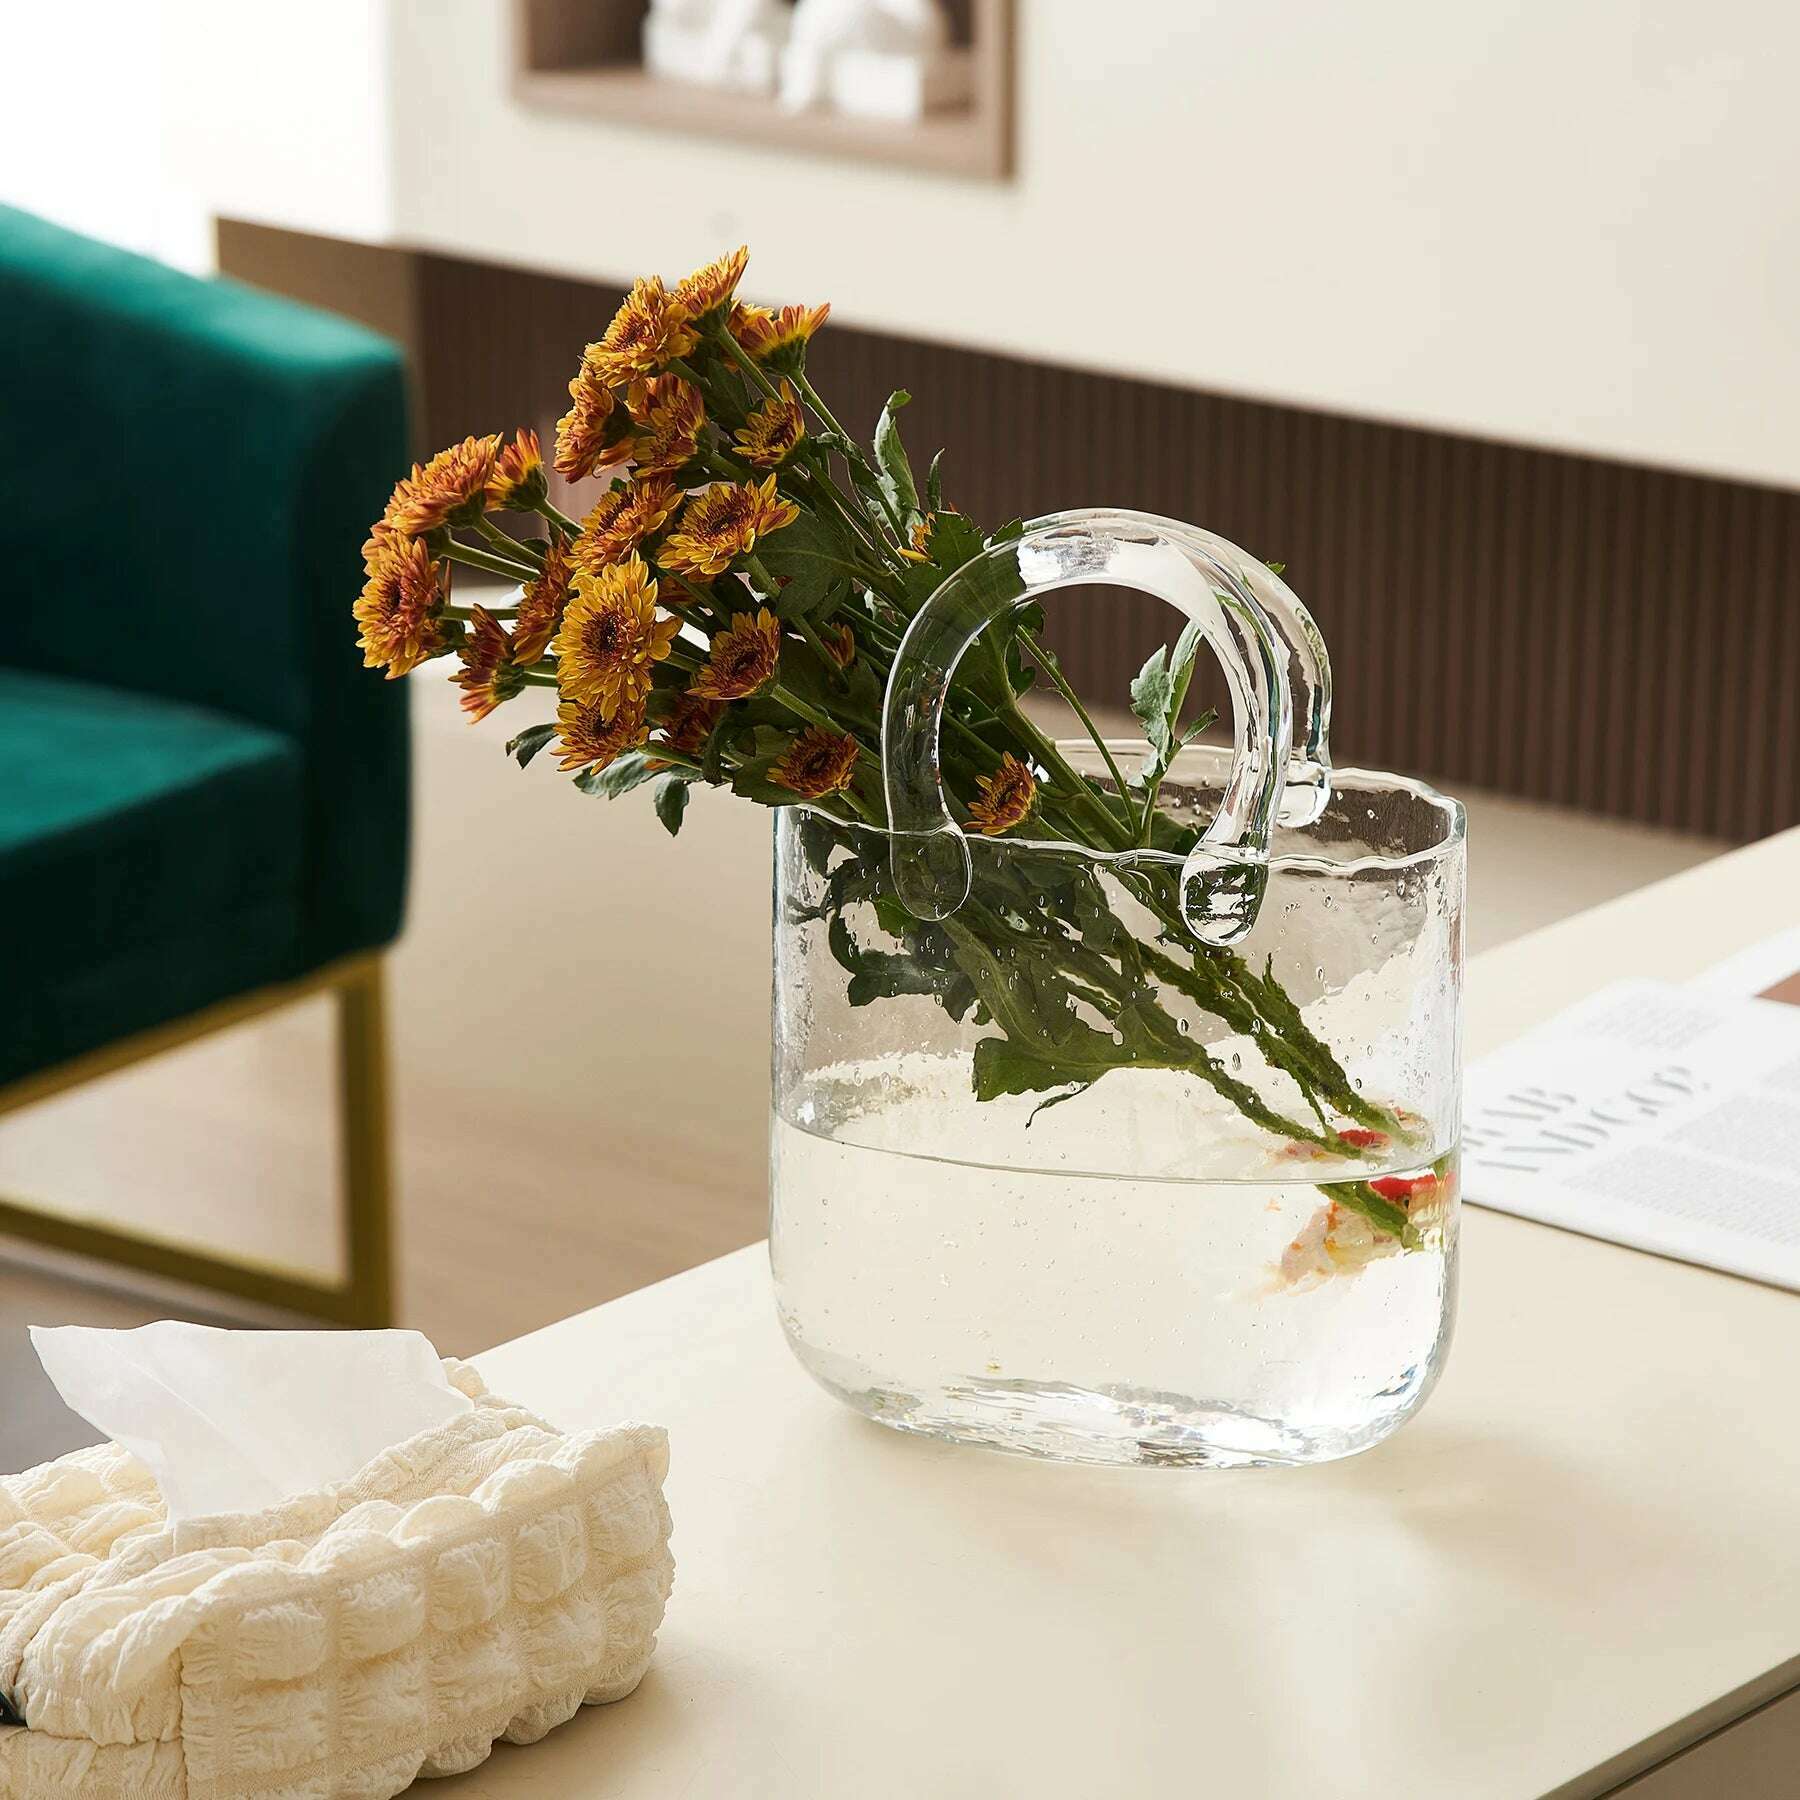 KIMLUD, Portable Glass Flower Vase Creative Fish Tank for Goldfish Beautiful Home Desktop Decoration Practical Vase LivingRoom Decor, KIMLUD Womens Clothes